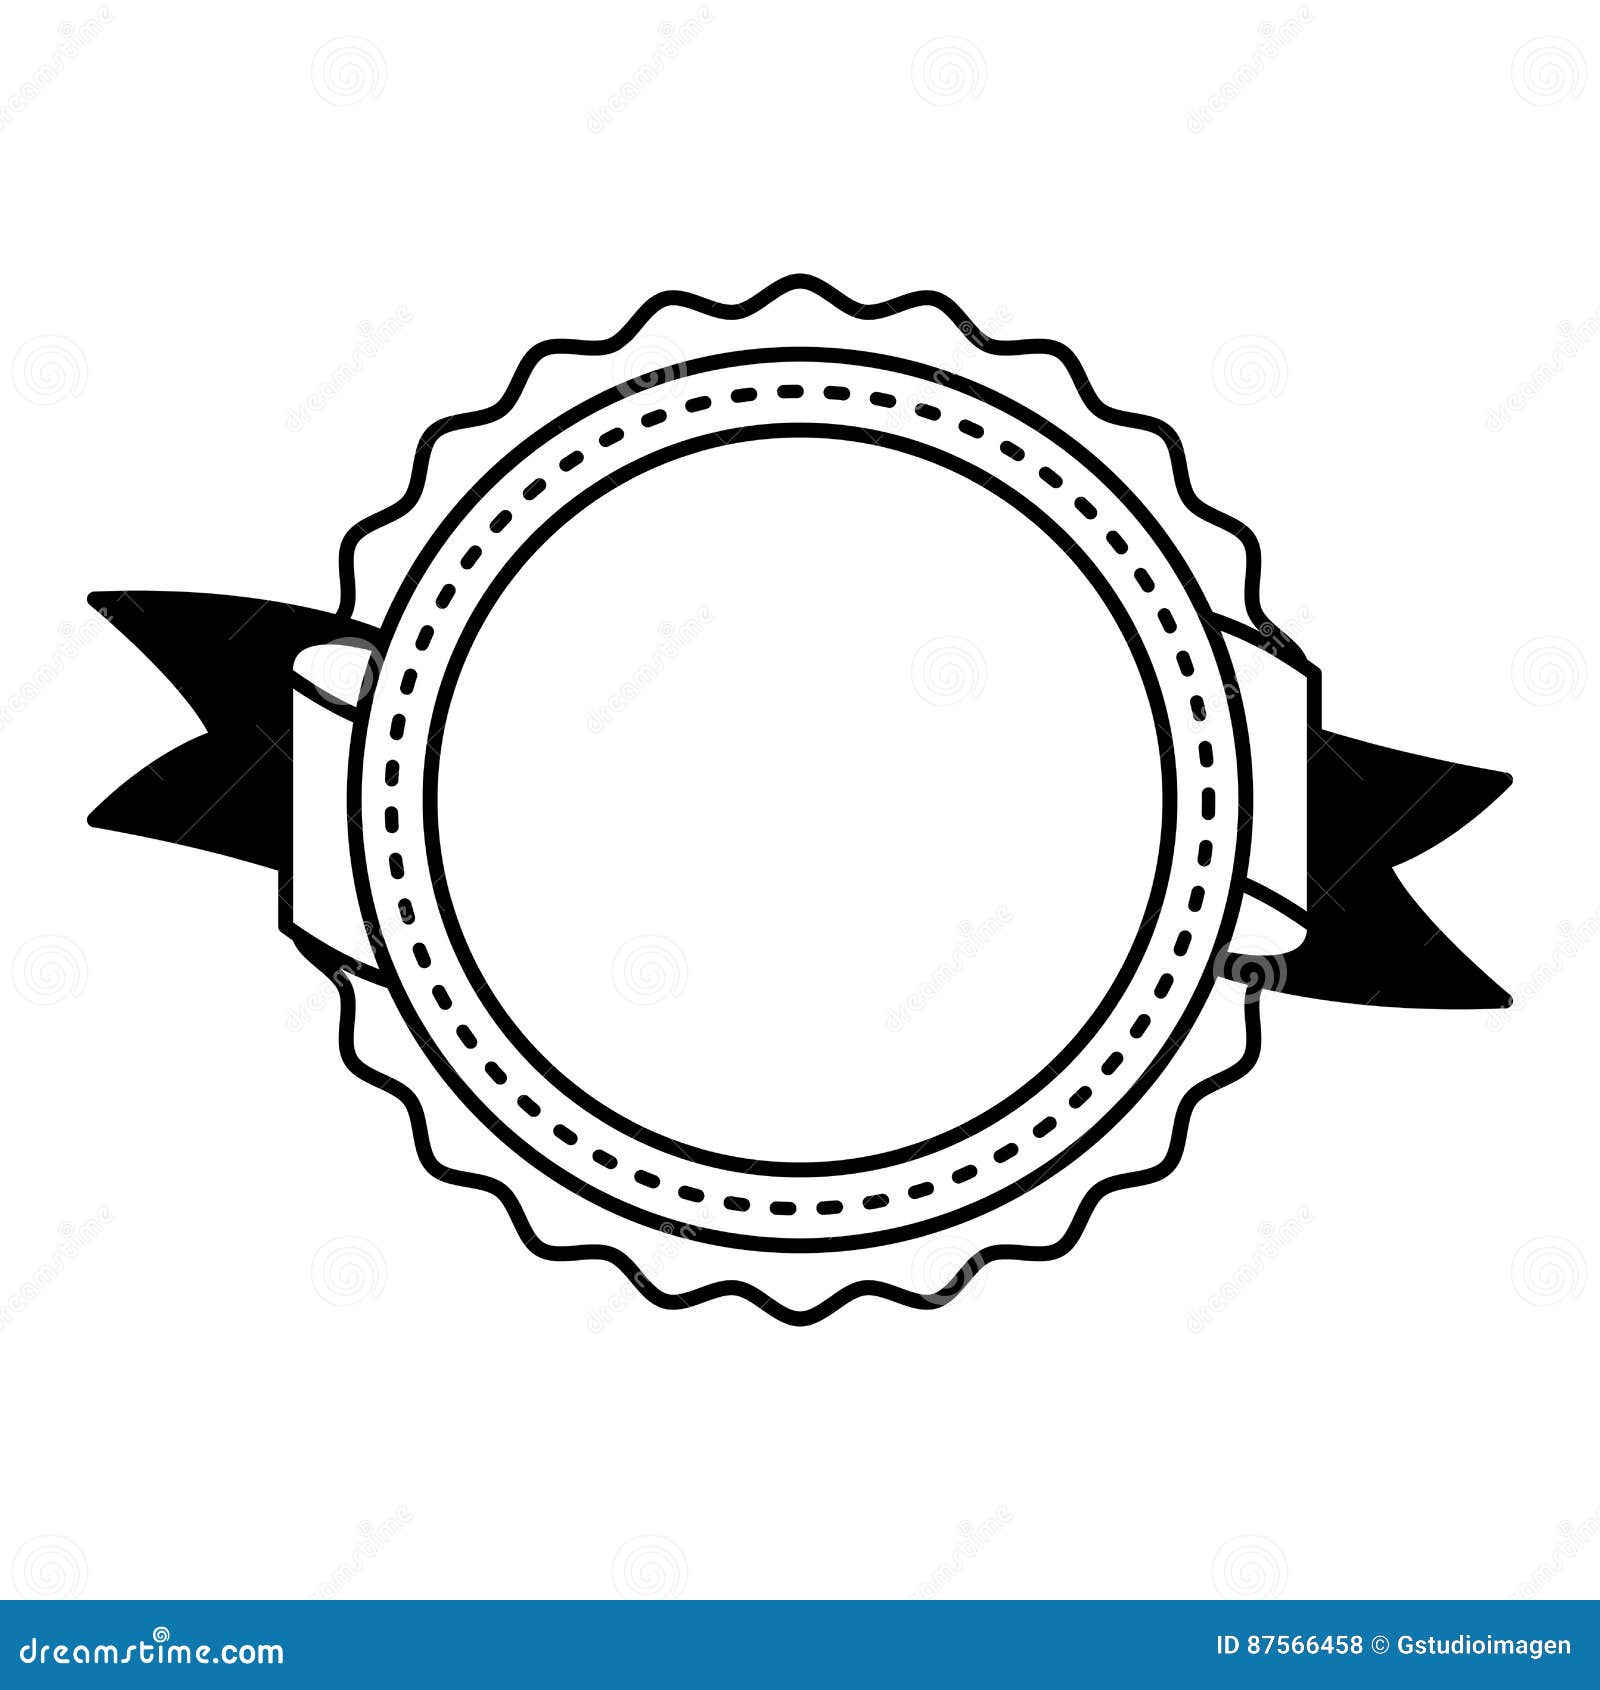 Circle seal stamp icon stock vector. Illustration of circle - 87566458